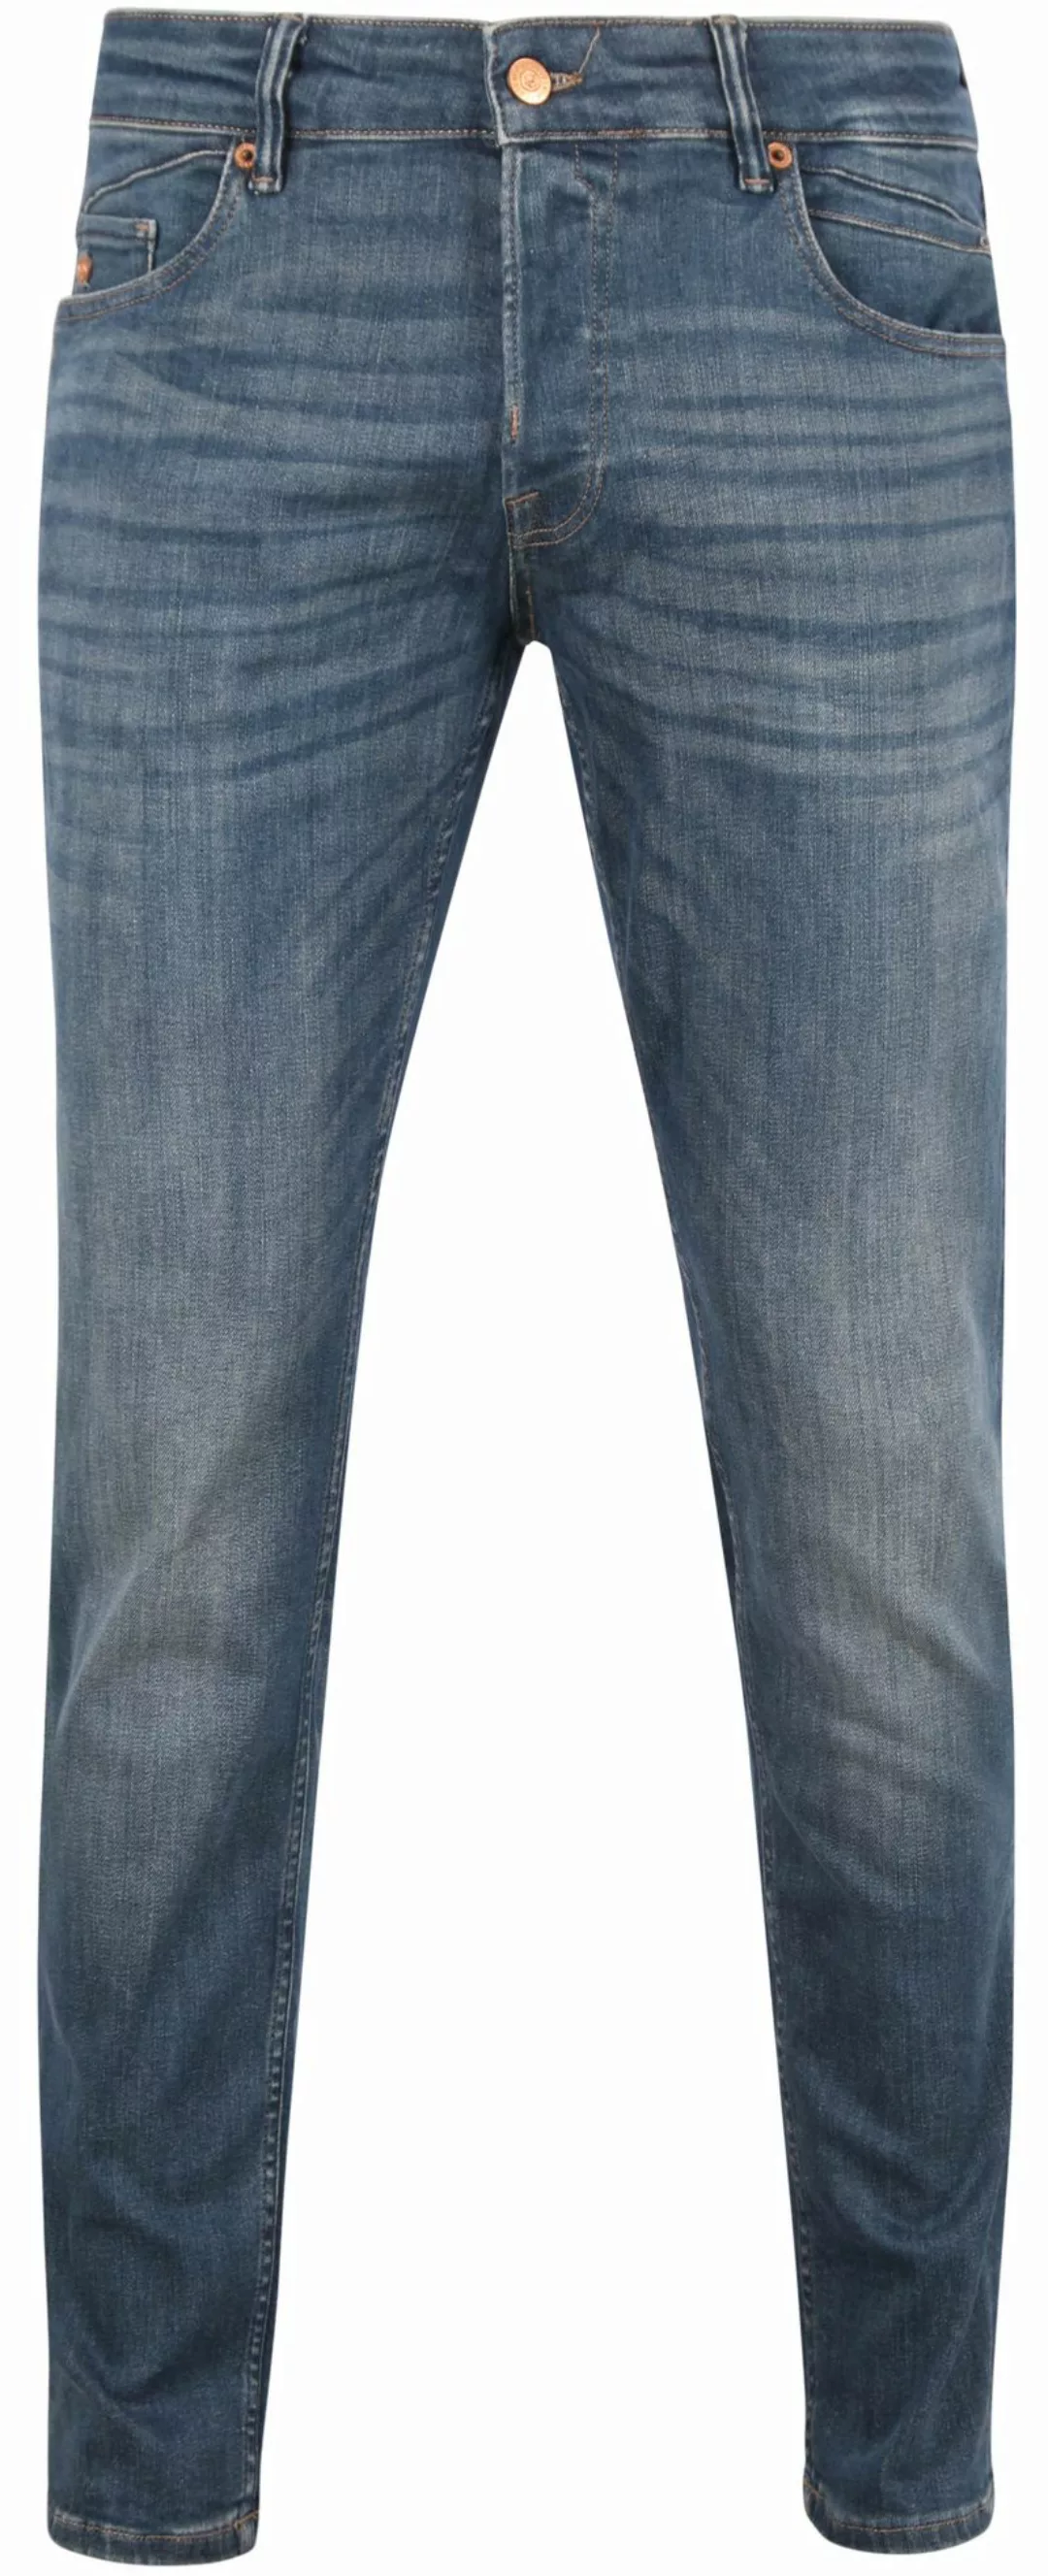 Cast Iron Shiftback Jeans Blau NBD - Größe W 36 - L 34 günstig online kaufen